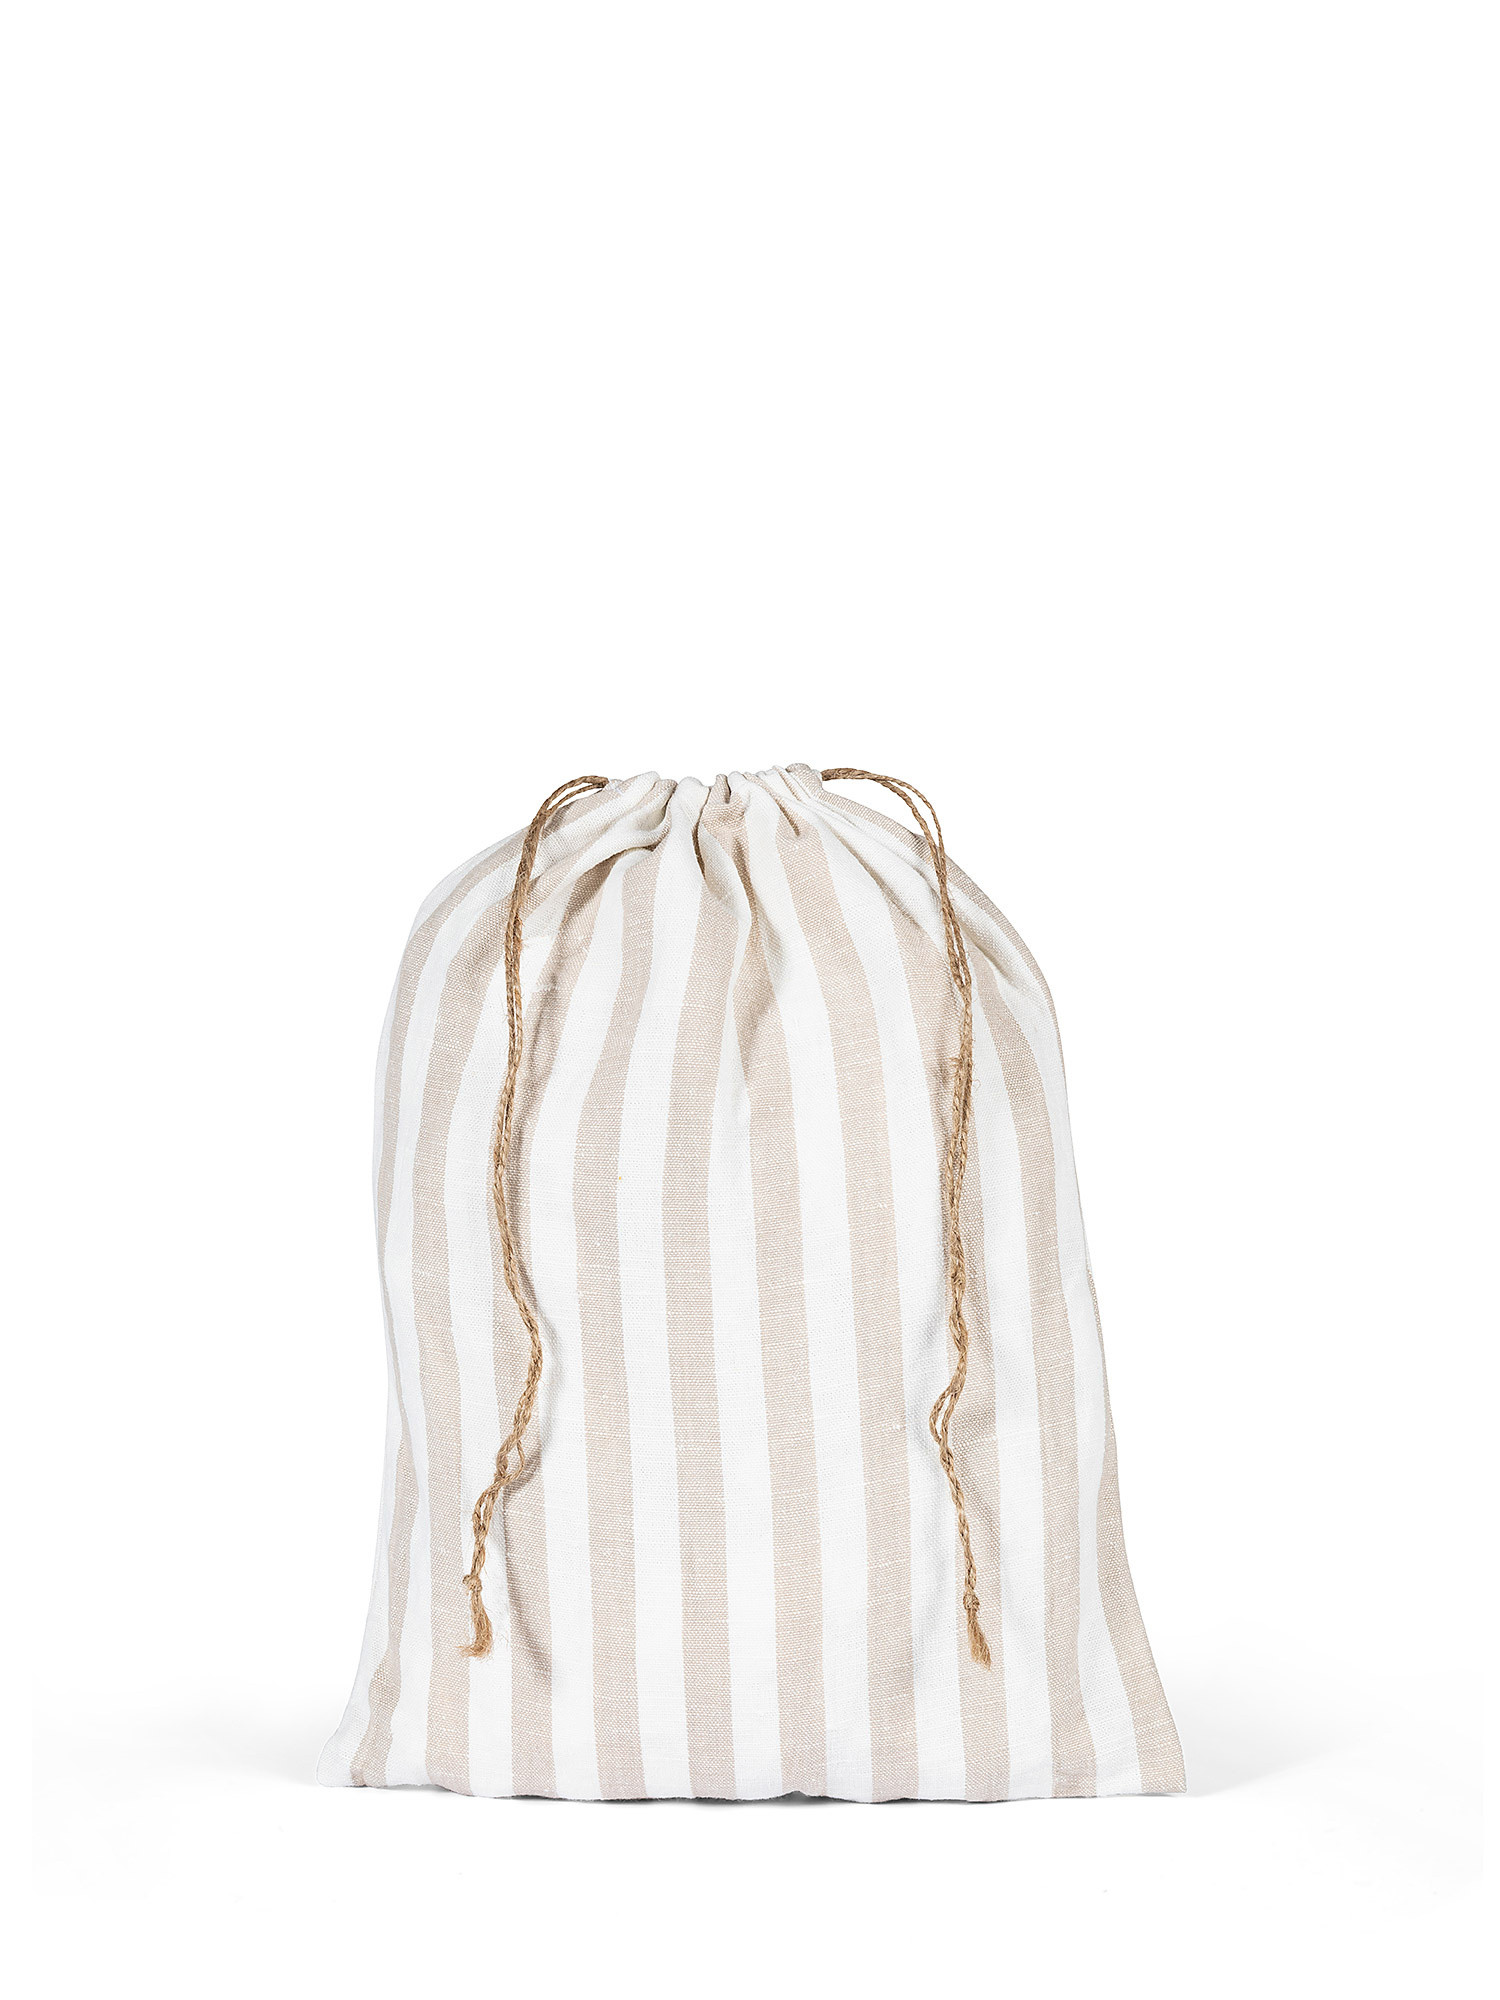 Striped linen and cotton bag, Beige, large image number 0